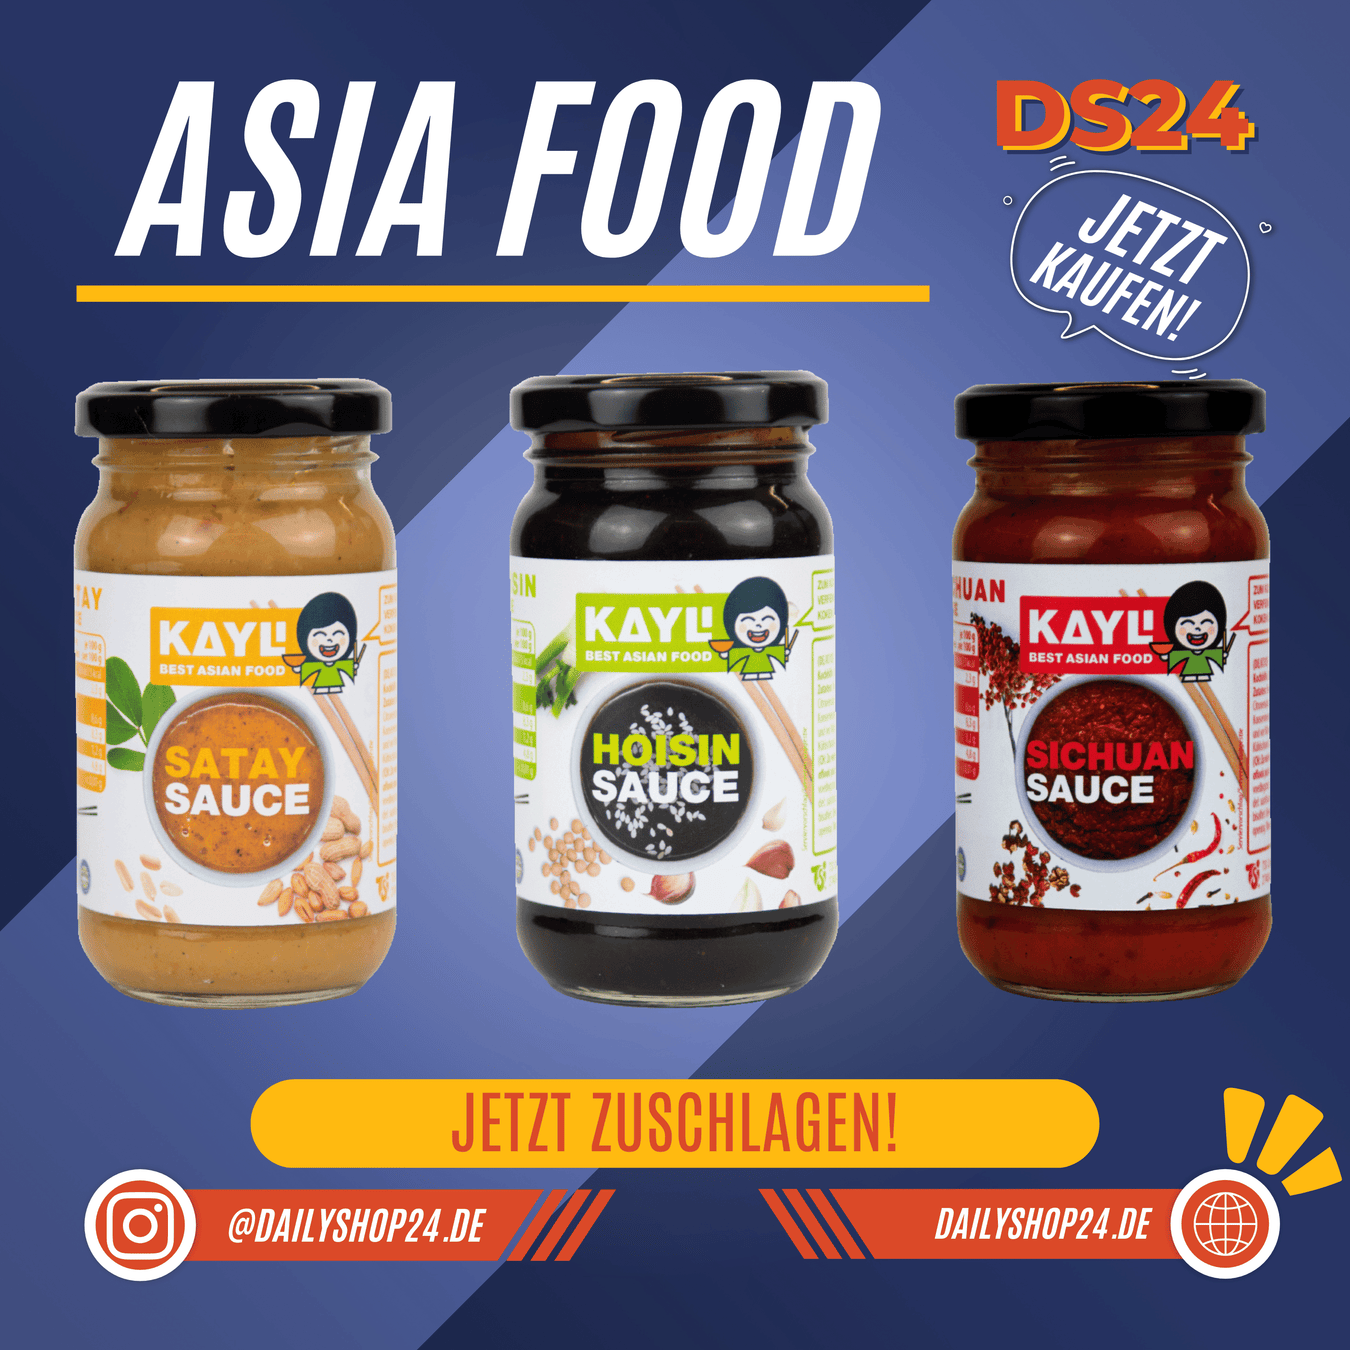 Dailyshop24 Kategorienbild für die Kategorie ASIA mit drei KAy Li Sacen Satay Sauce Szechuan Soße und Hoisin Soße